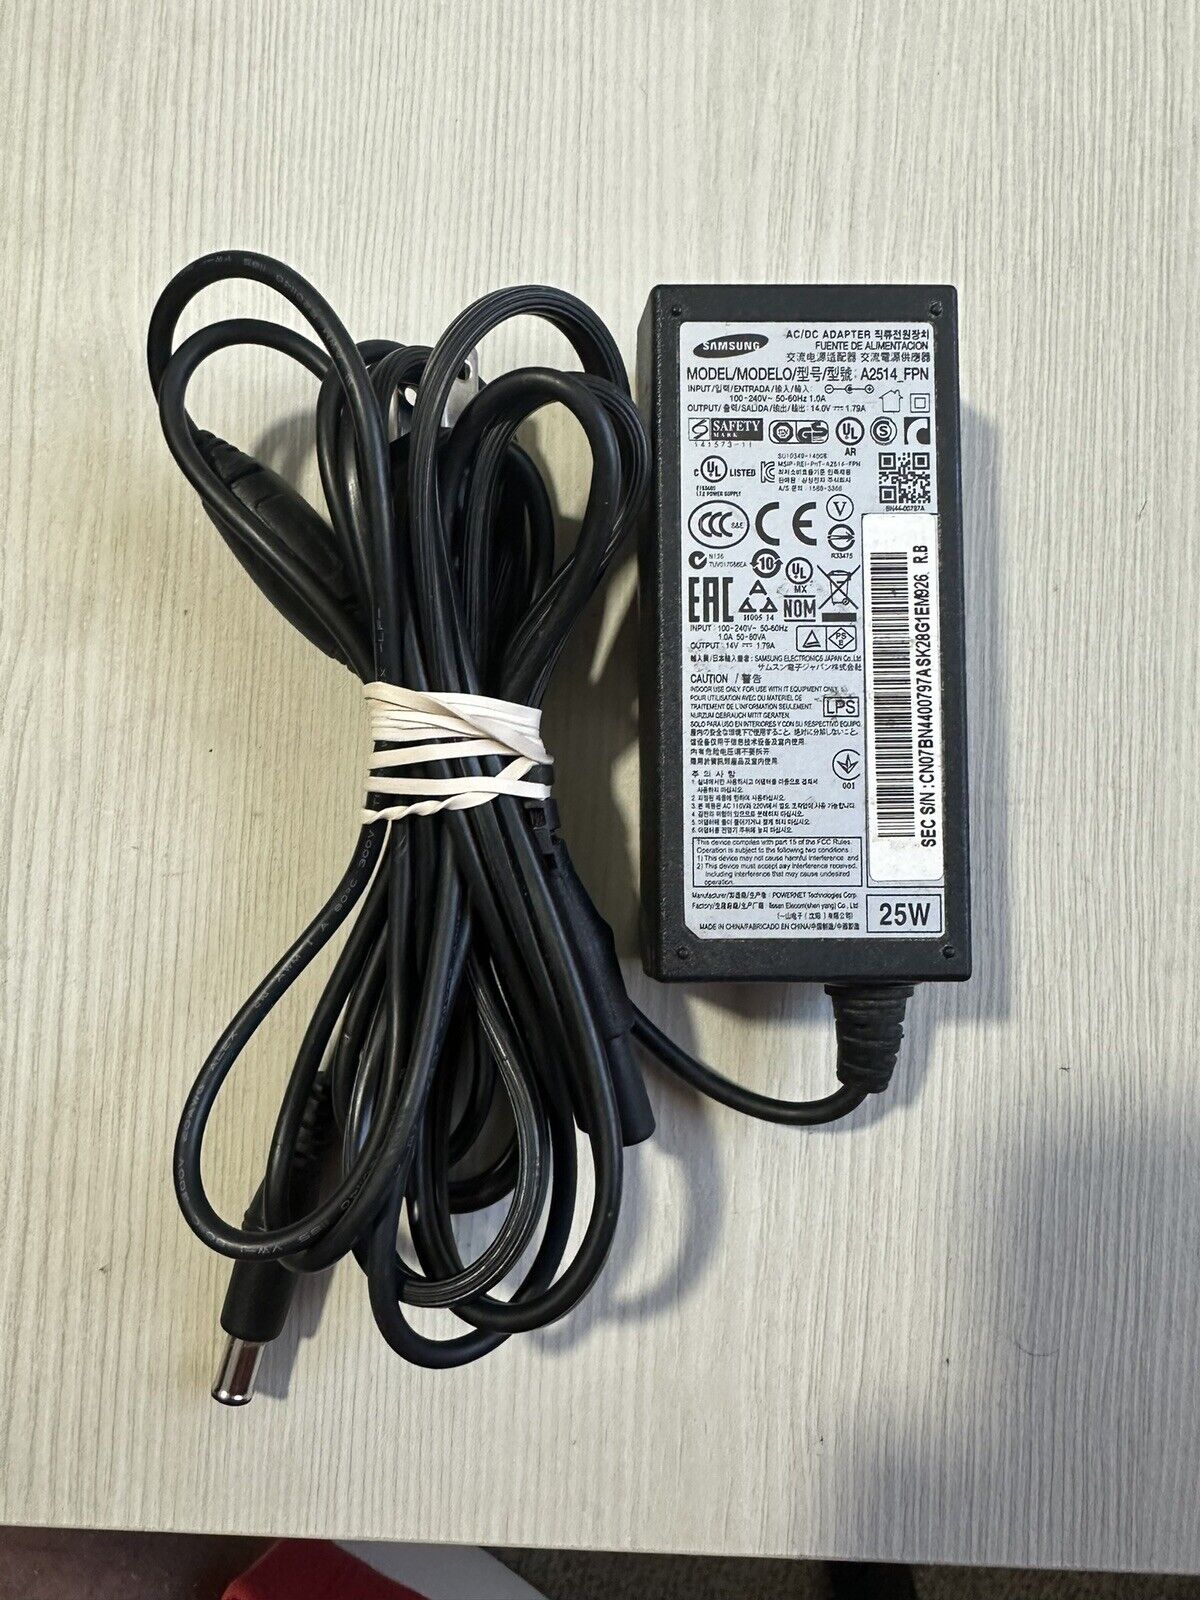 Genuine Samsung Monitor A2514 Power Adapter OEM Model: A2514-FPN